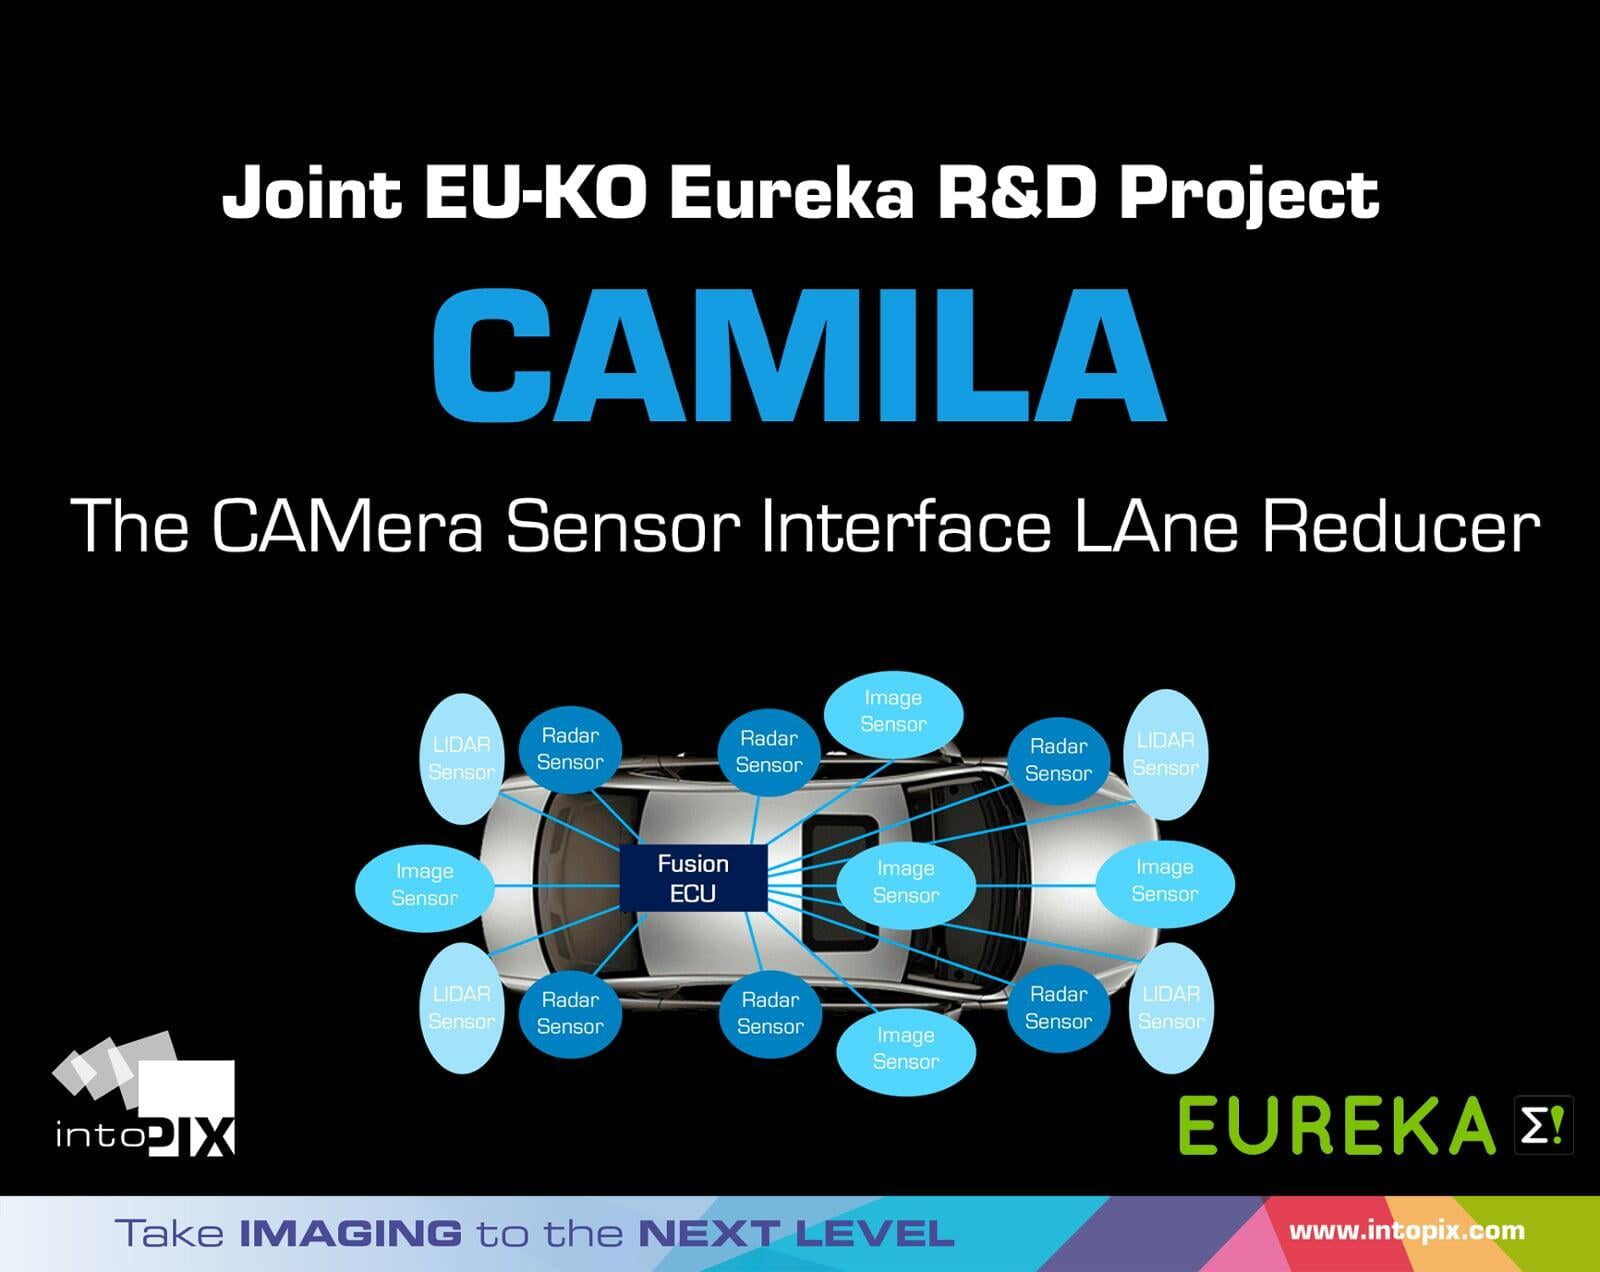 intoPIX는 CAMera Sensor Interface LANe Reducer인 새로운 연구 프로젝트 CAMILA를 주도하고 있습니다.